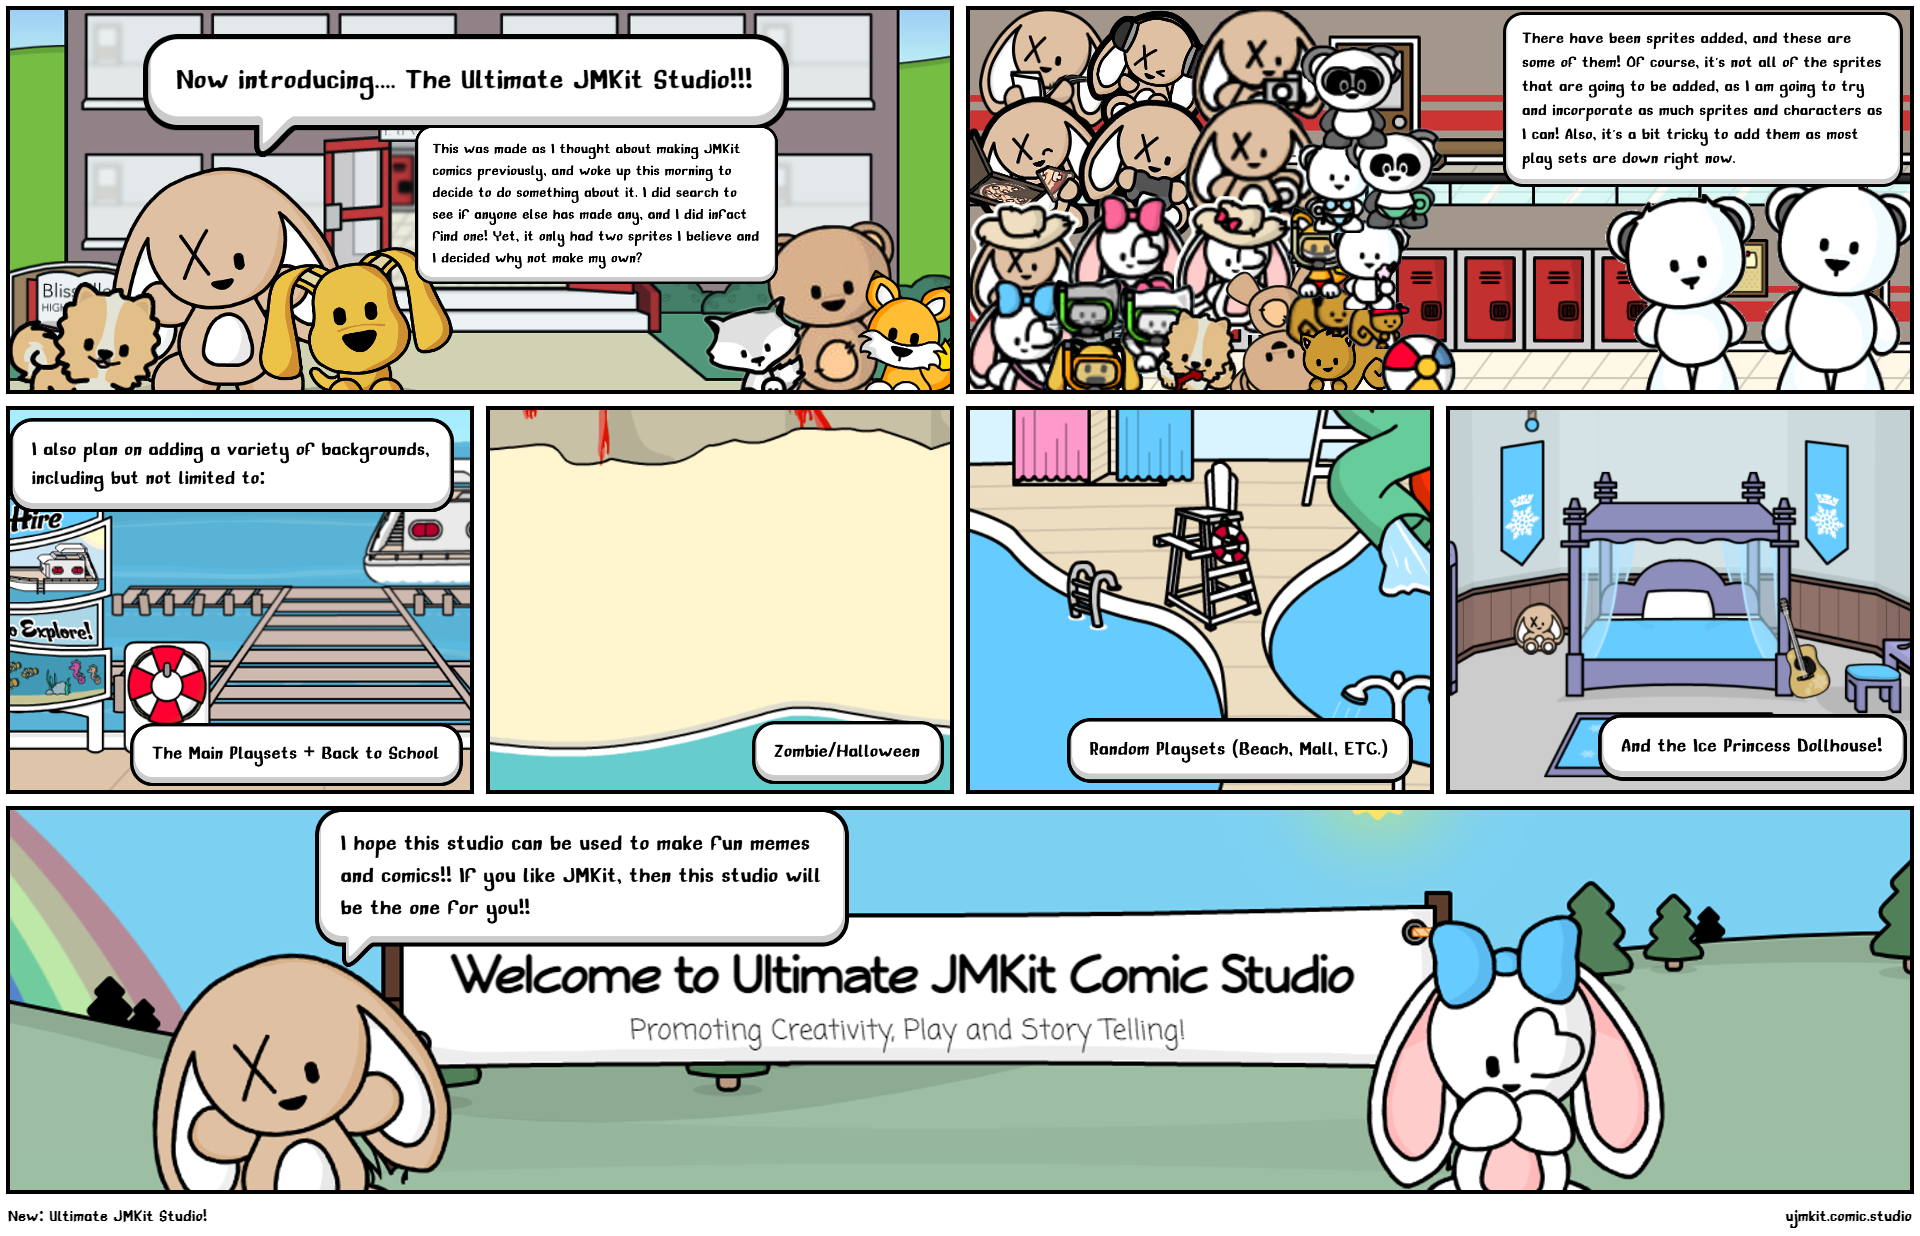 New: Ultimate JMKit Studio!